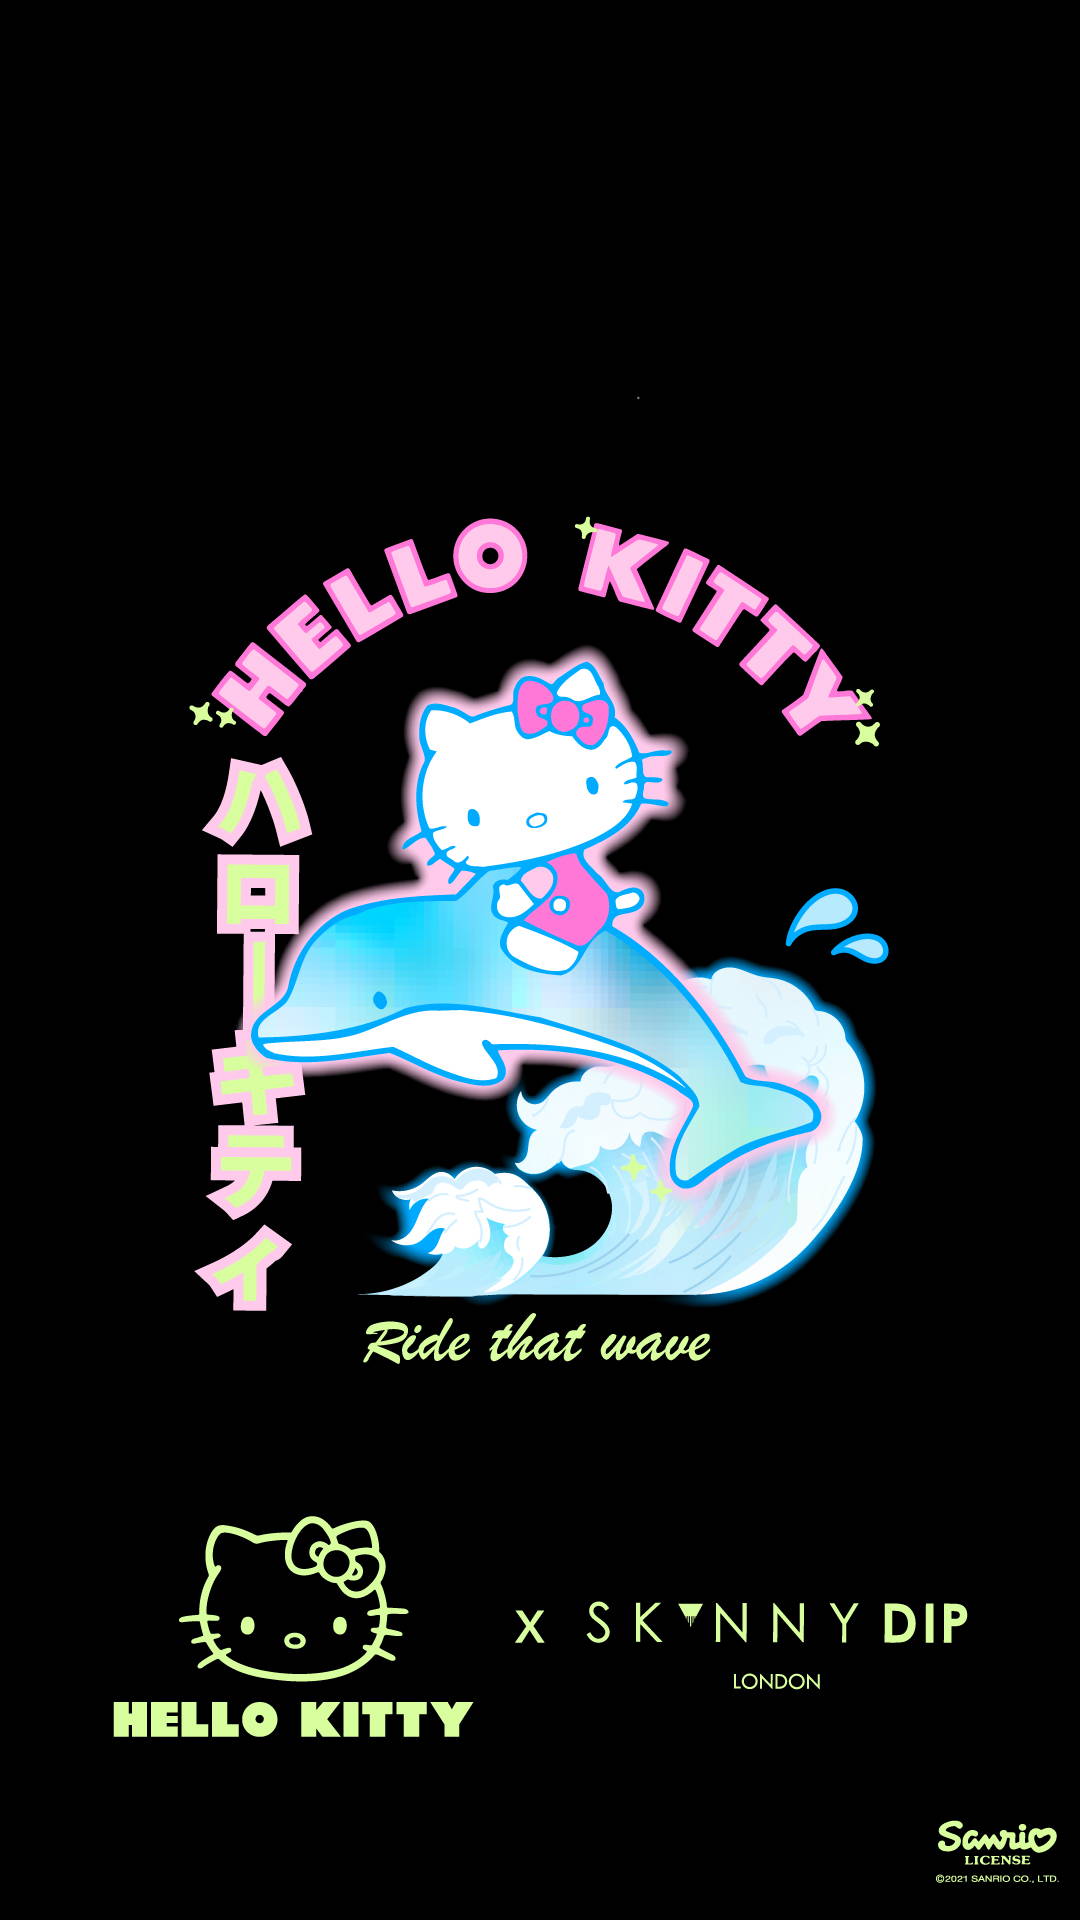 Hello Kitty x Skinnydip Phone Wallpaper